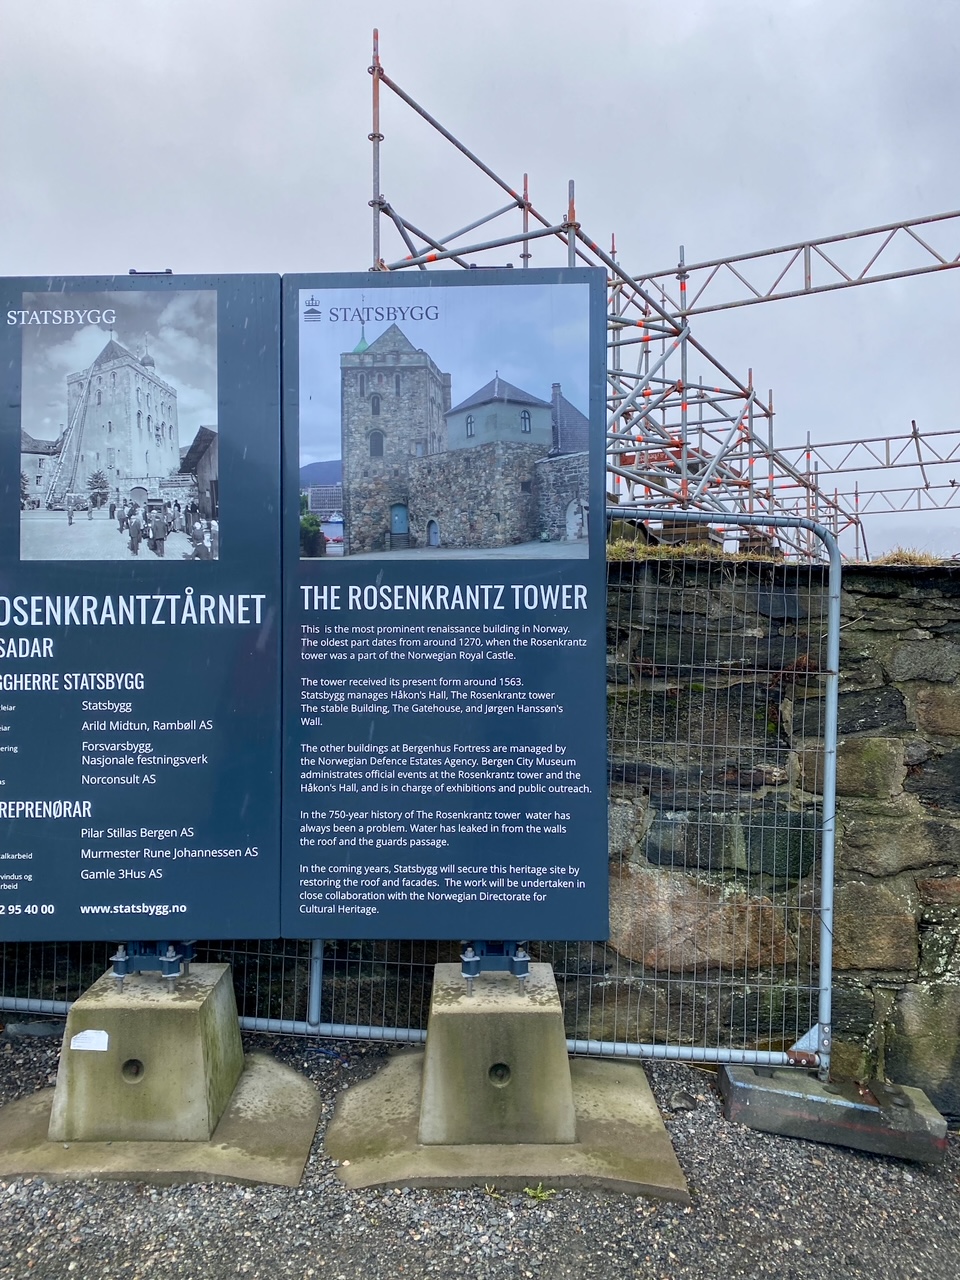 Rosenkrantz Tower reconstruction efforts